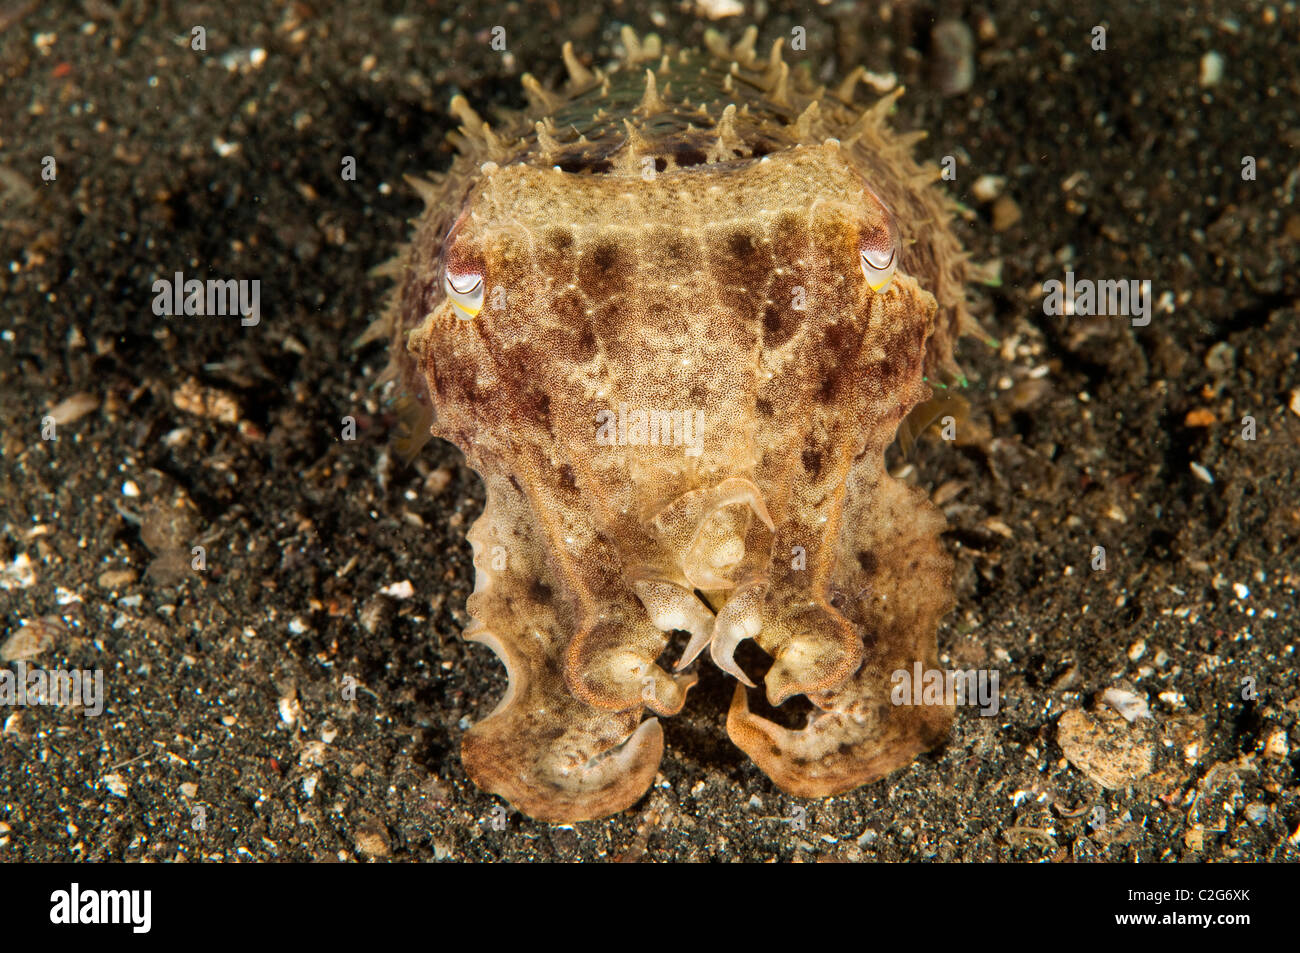 Cuttlefish, Sepia latimanus, Sulawesi Indonesia. Stock Photo